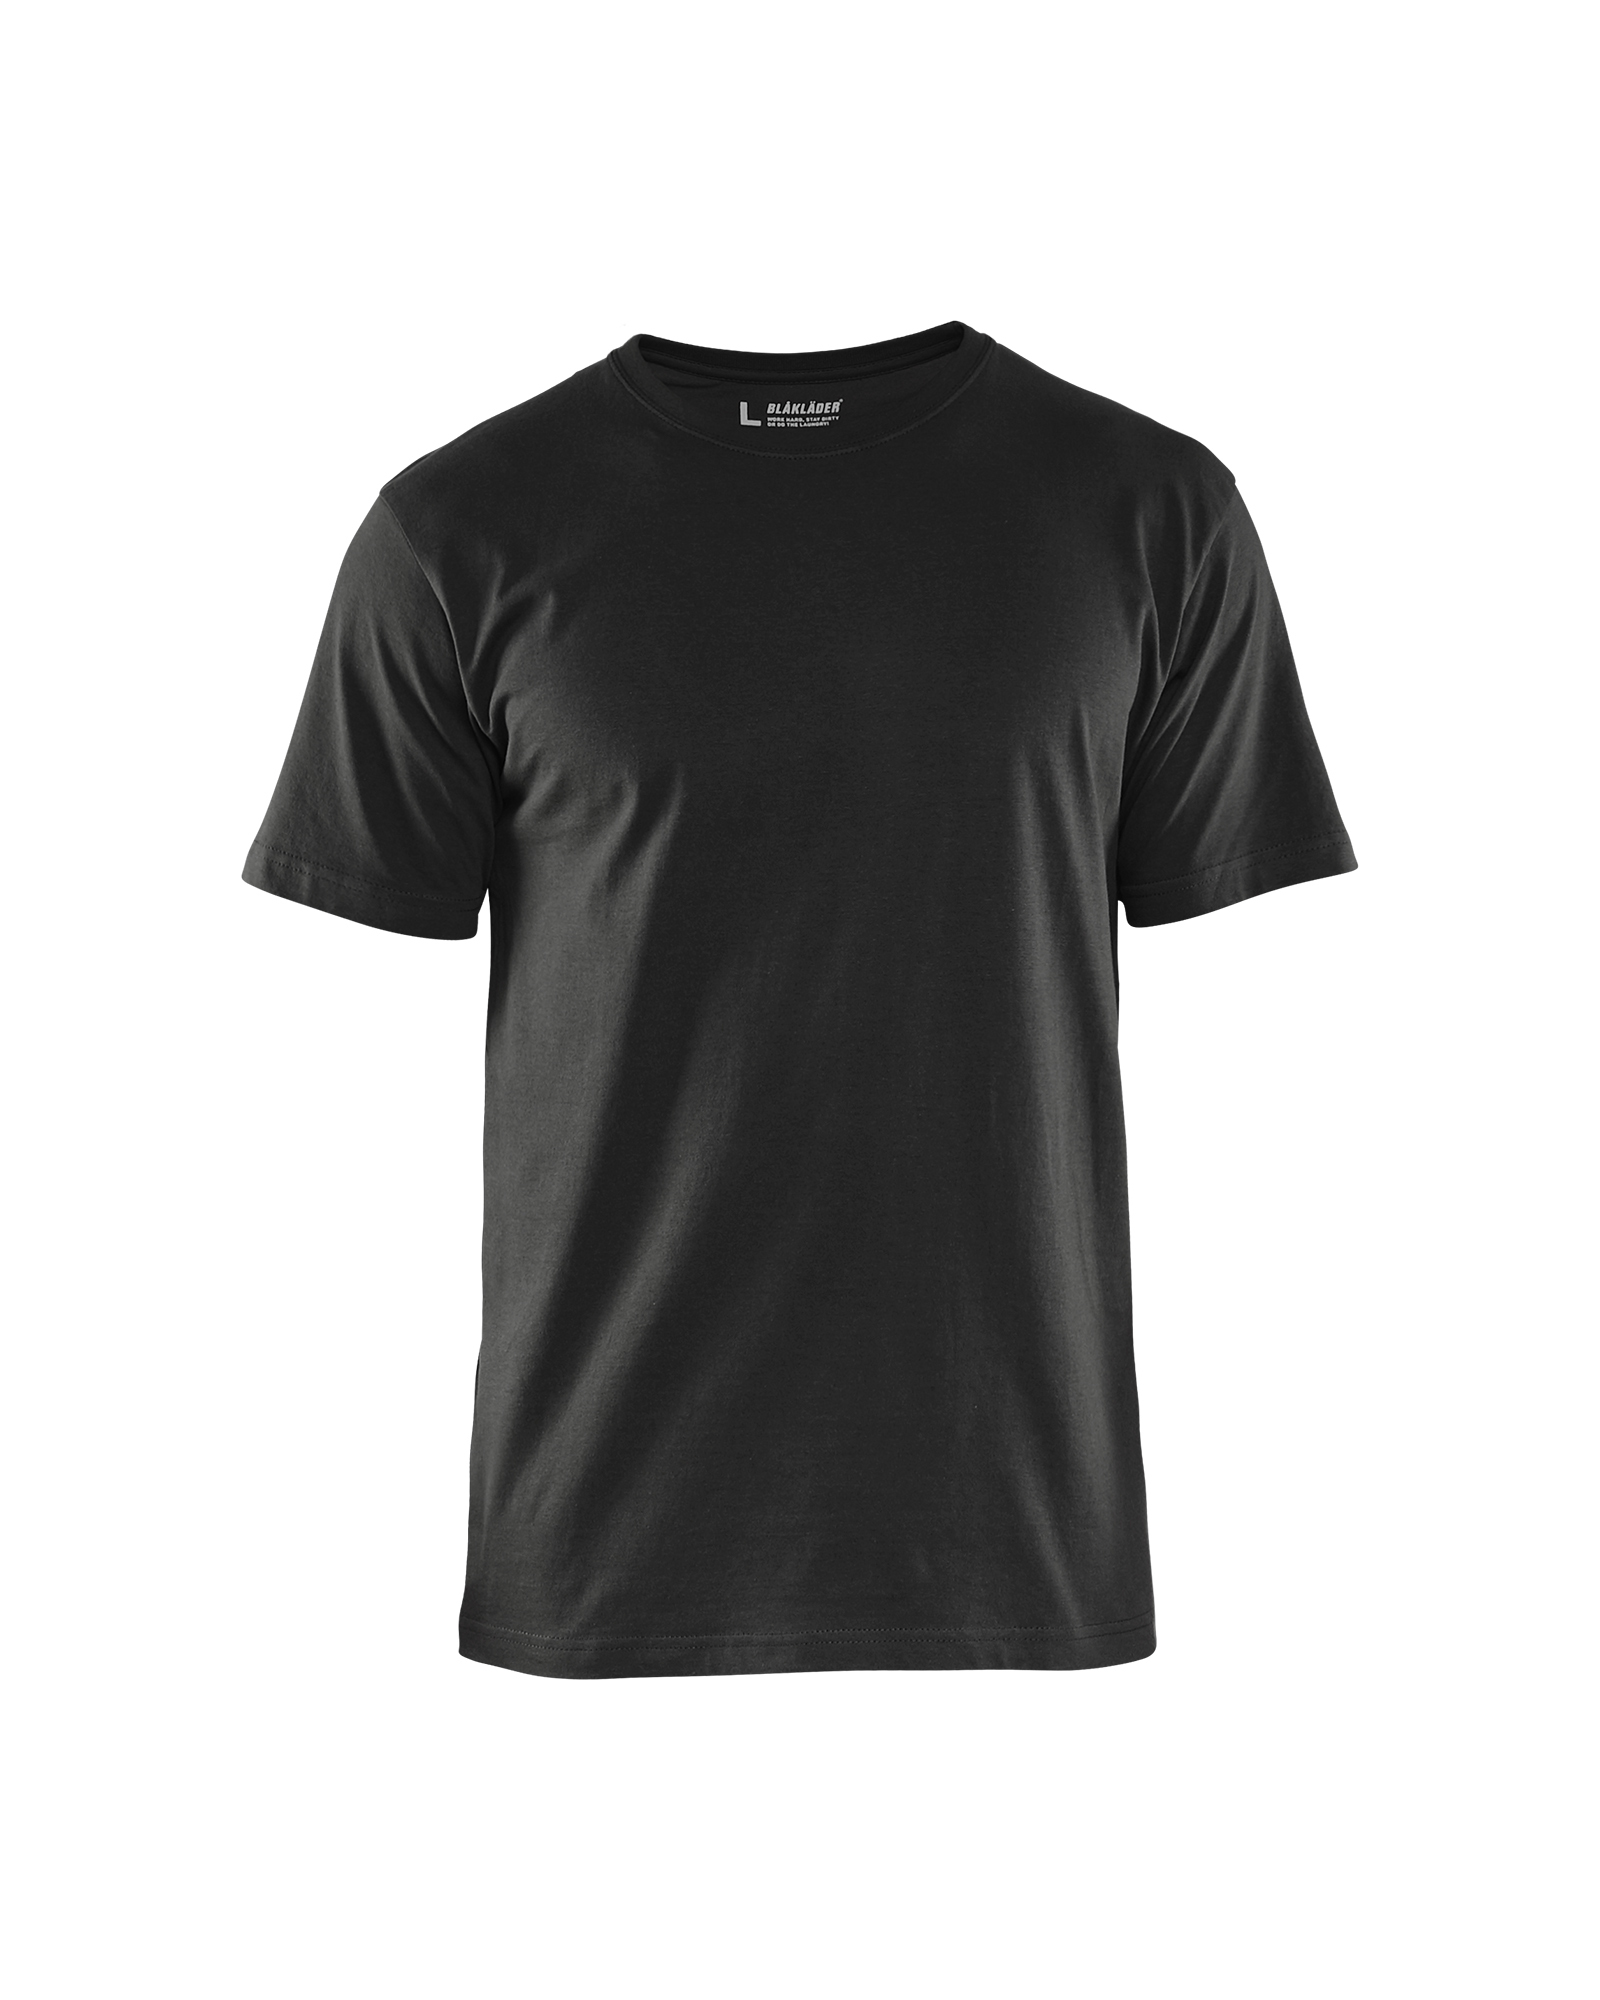 T-shirt noir Blaklader 3525 - 352510429900